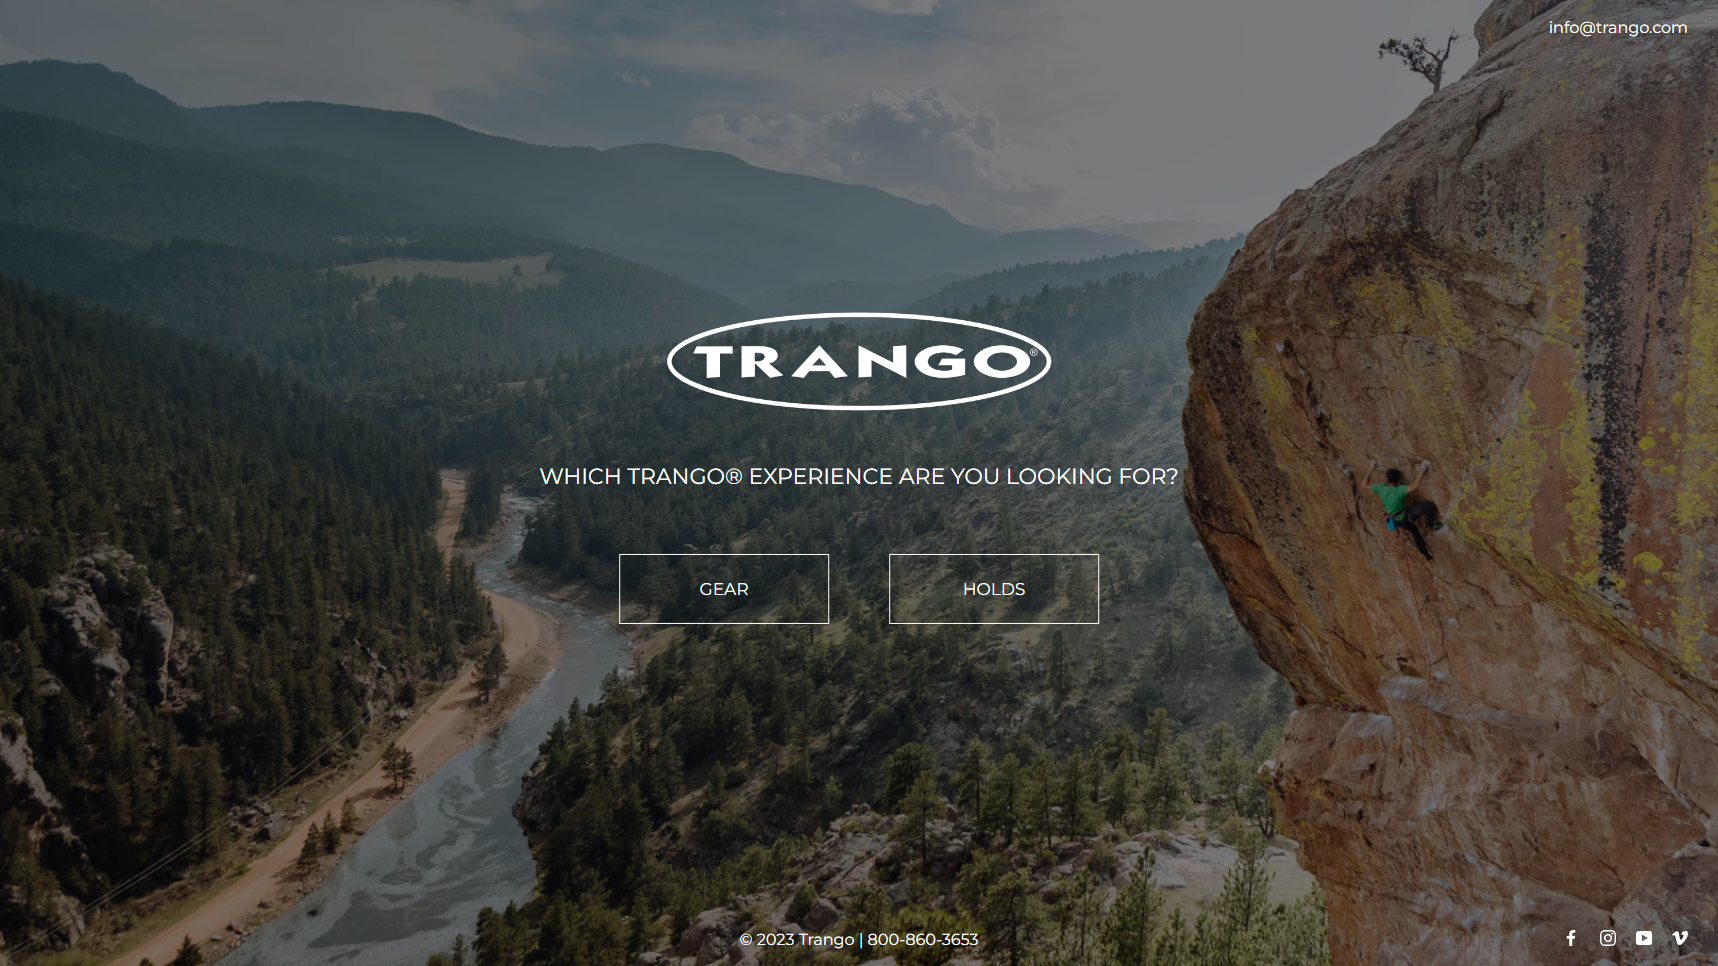 Trango - Climbing Equipment Manufacturer